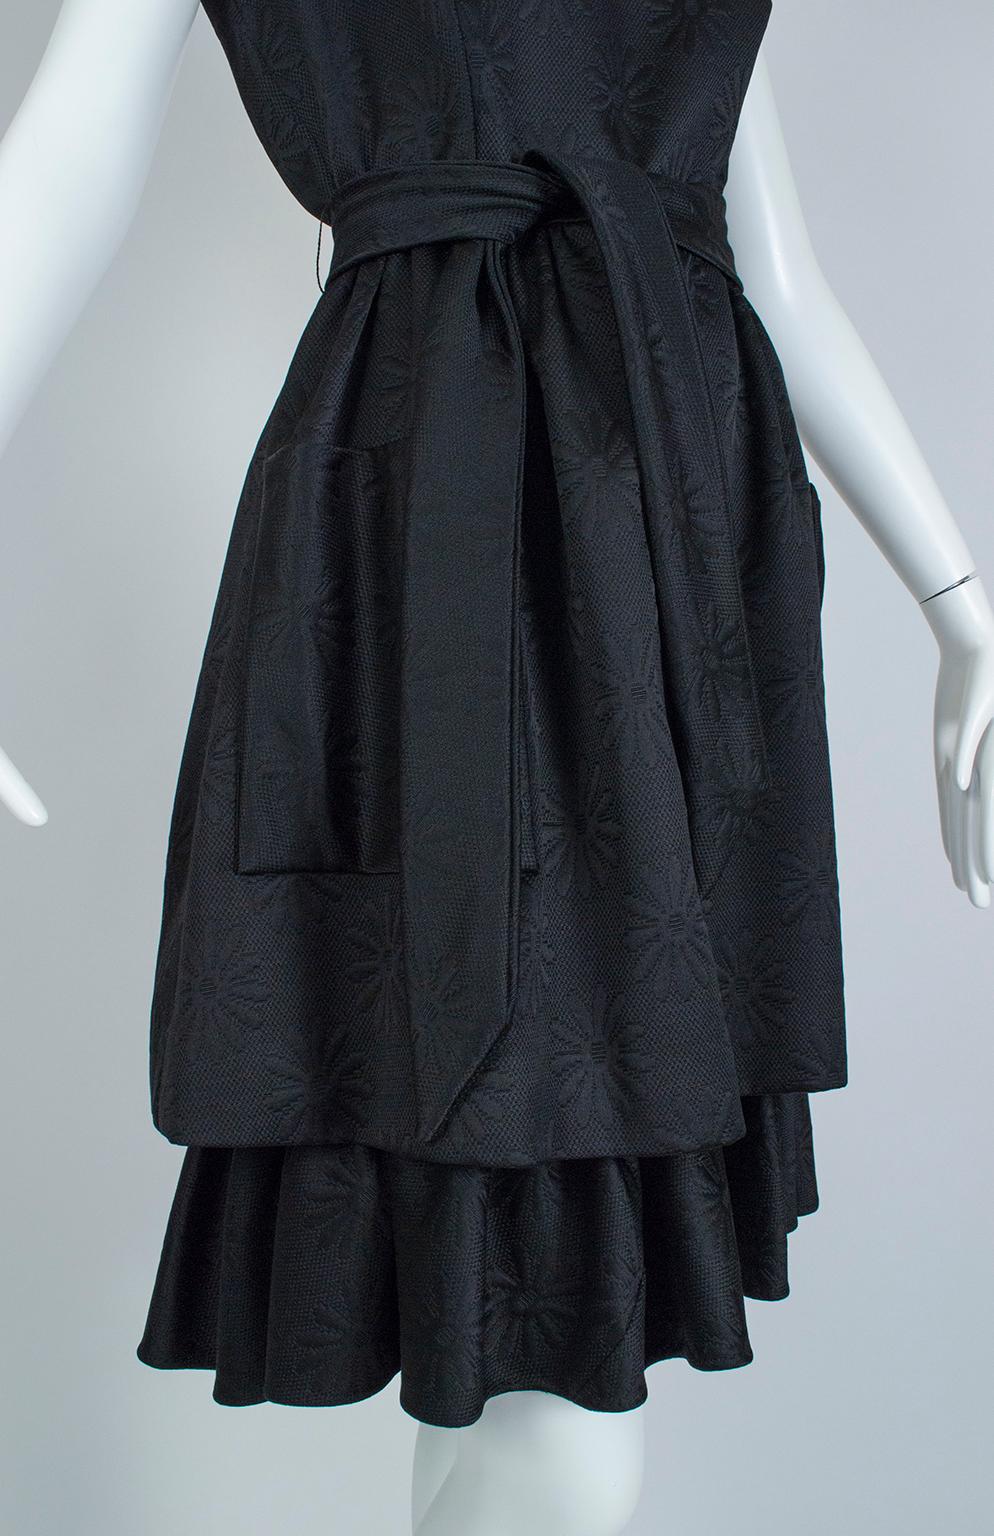 Black Matelassé *Large Size* Cowl Neck Lampshade Skirt Pocket Day Dress-L, 1950s For Sale 7